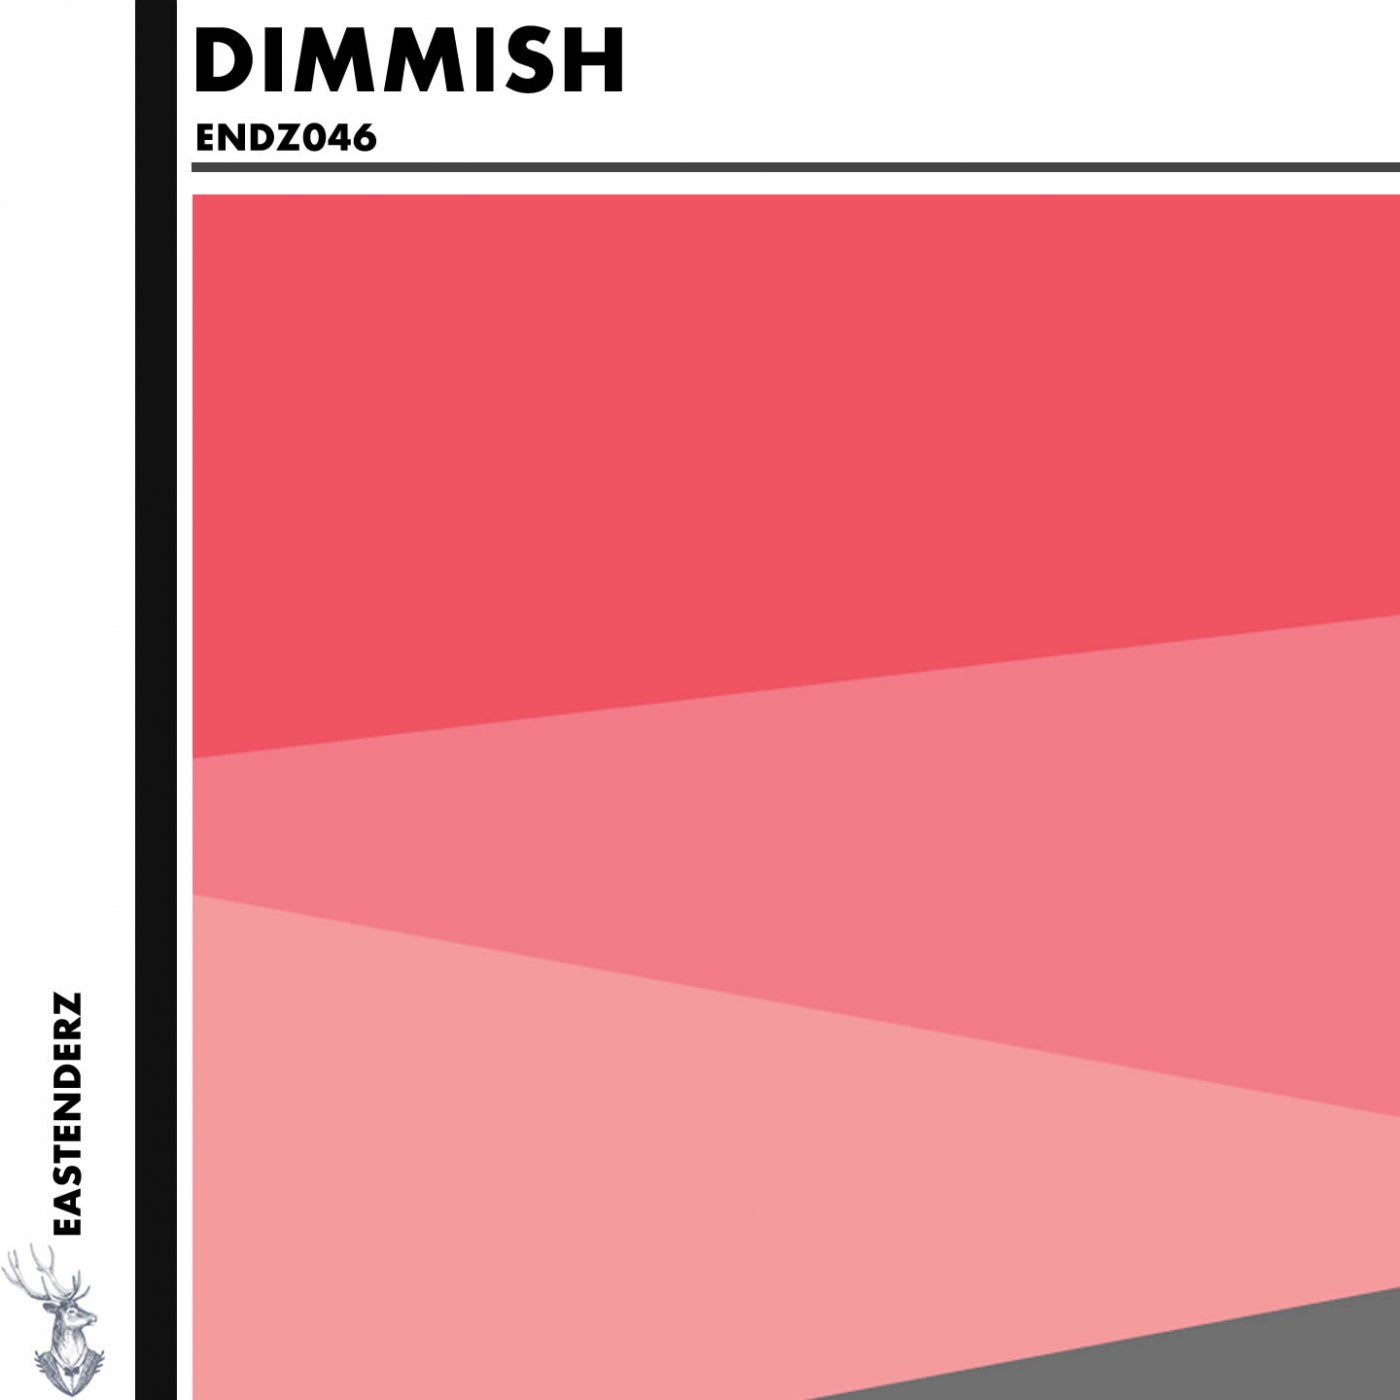 Download Dimmish - ENDZ046 on Electrobuzz